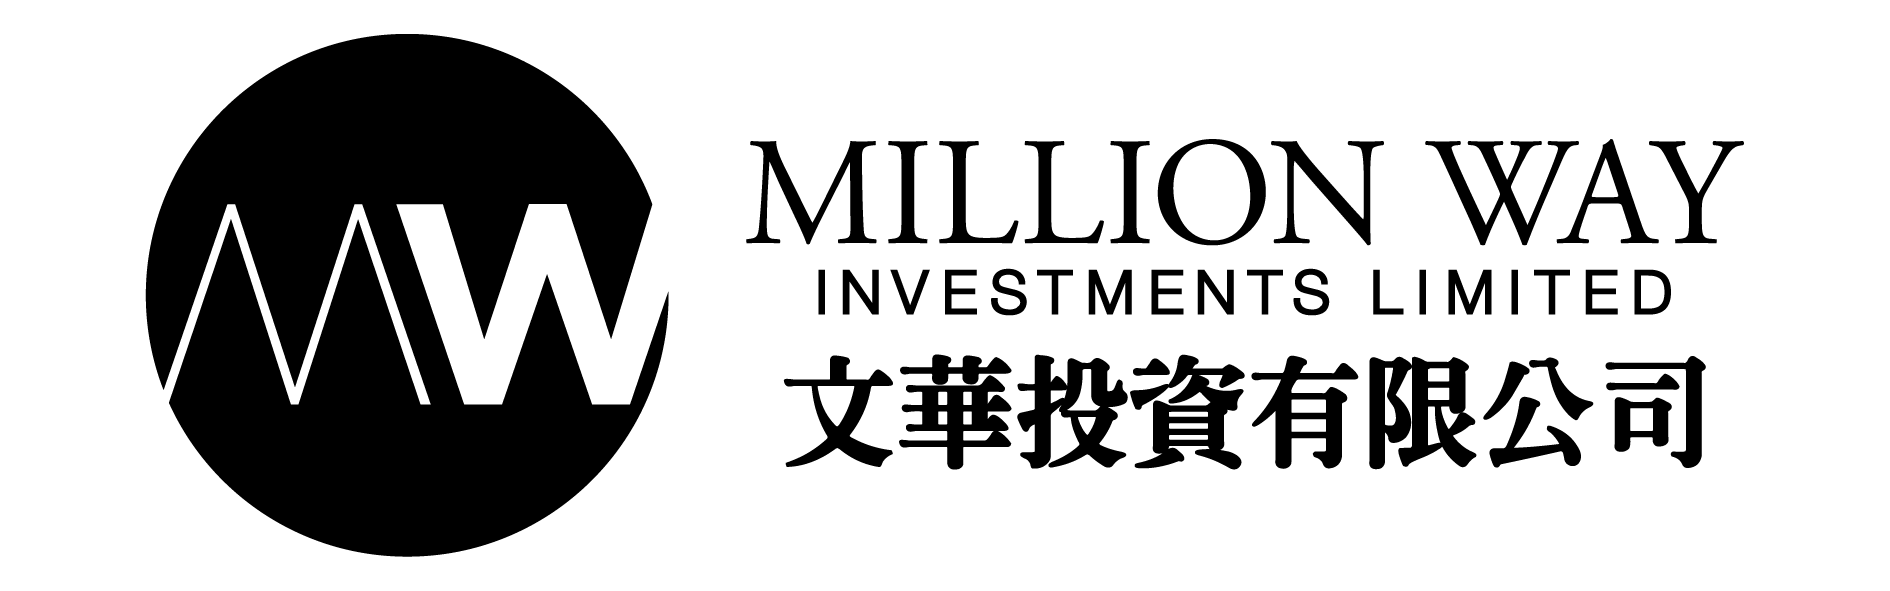 Million Way Investment Limited 文華投資有限公司 